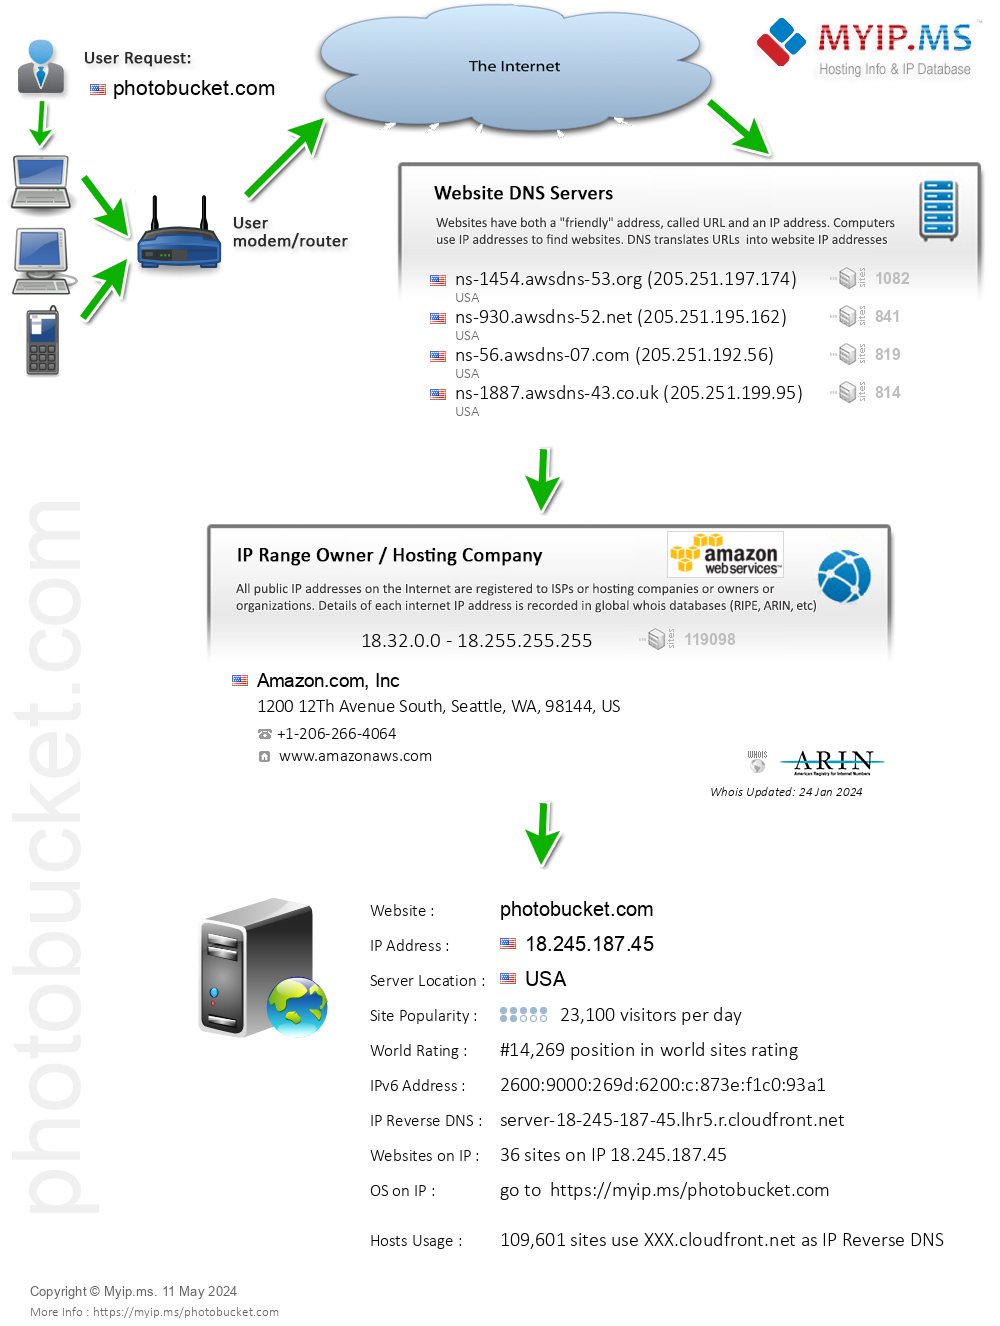 Photobucket.com - Website Hosting Visual IP Diagram